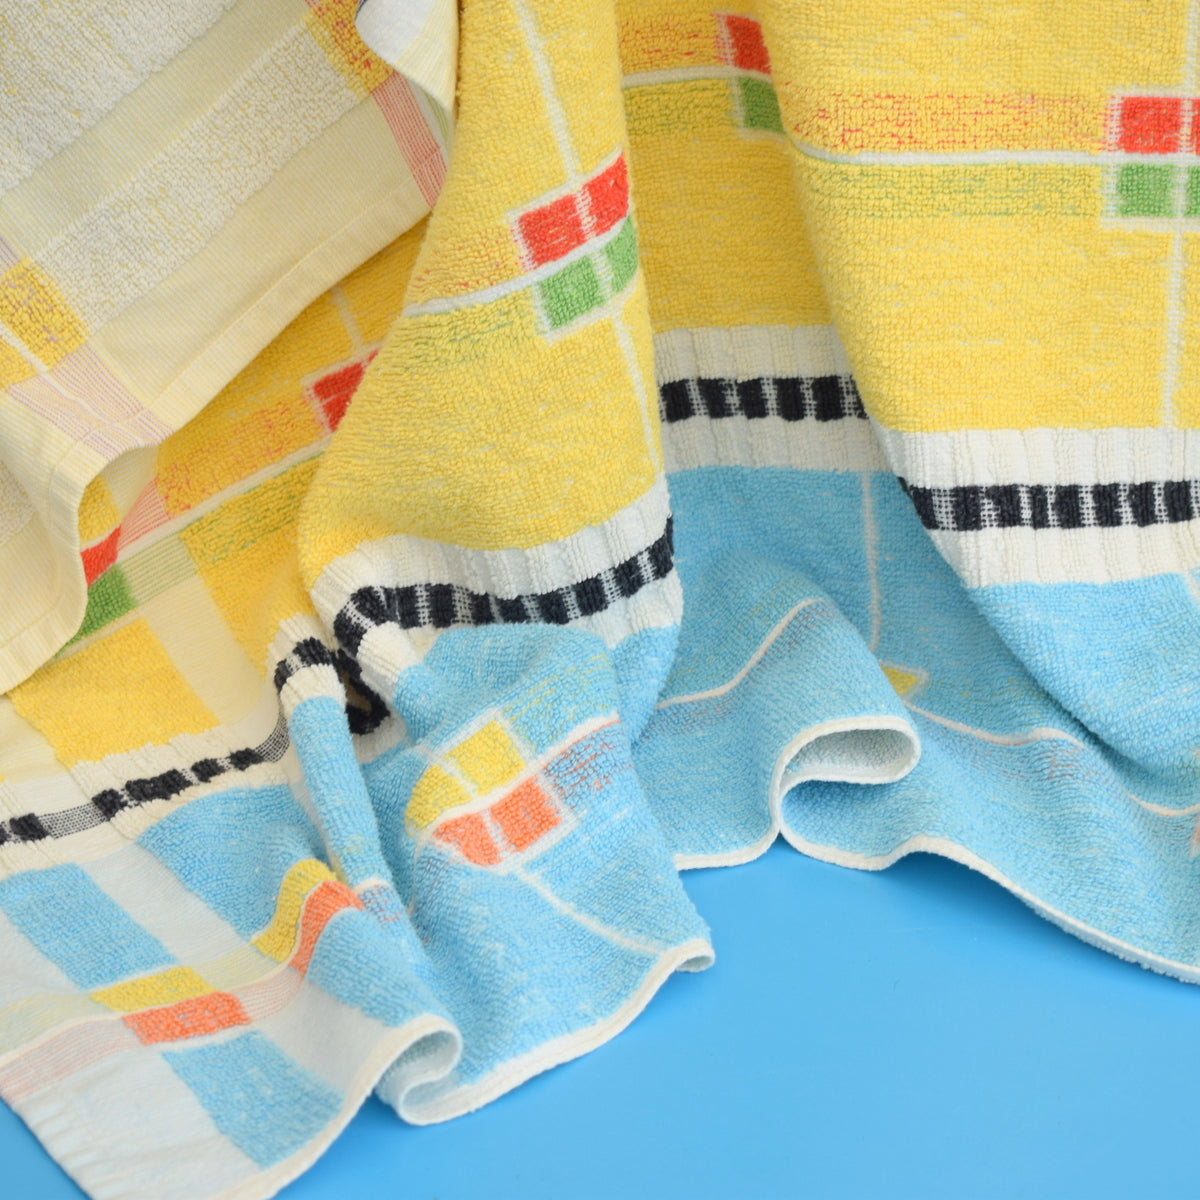 Vintage 1950s Cotton Bath Towel - Checks / Stripes